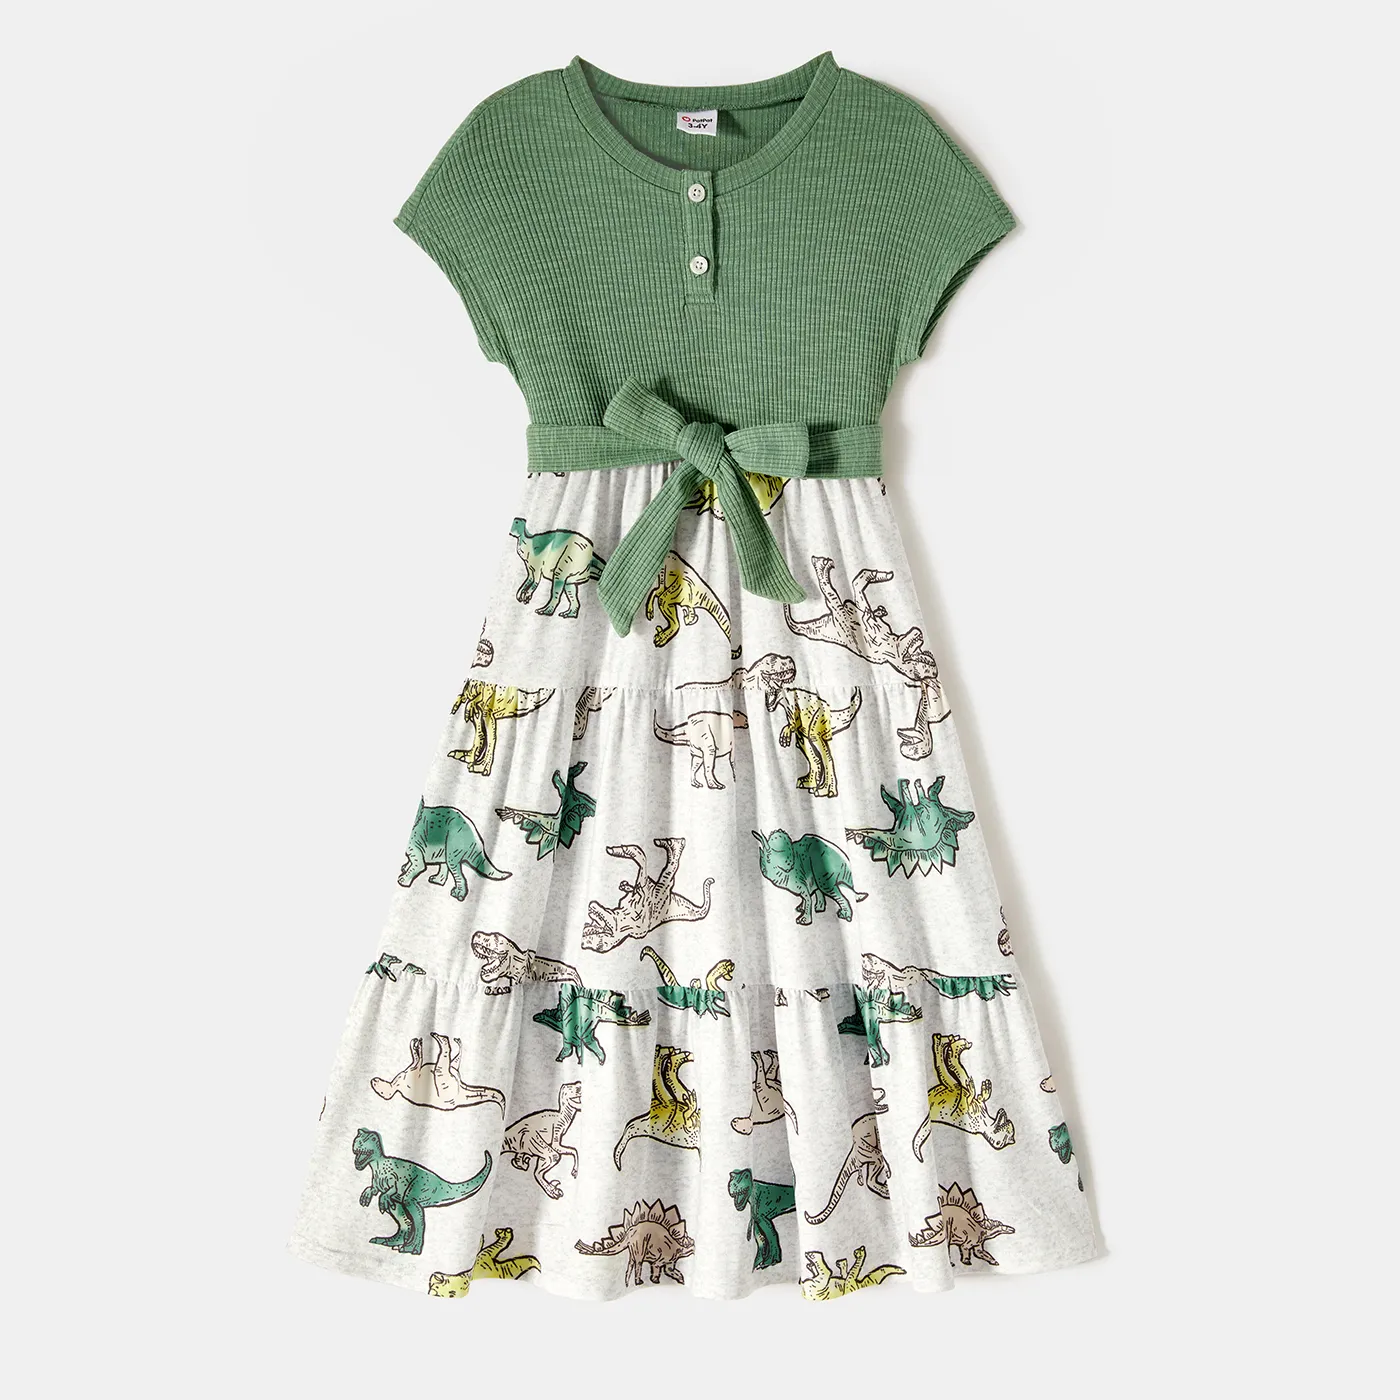 Family Matching Green Rib Knit Spliced Allover Dinosaur Print Dresses And Short-sleeve T-shirts Sets